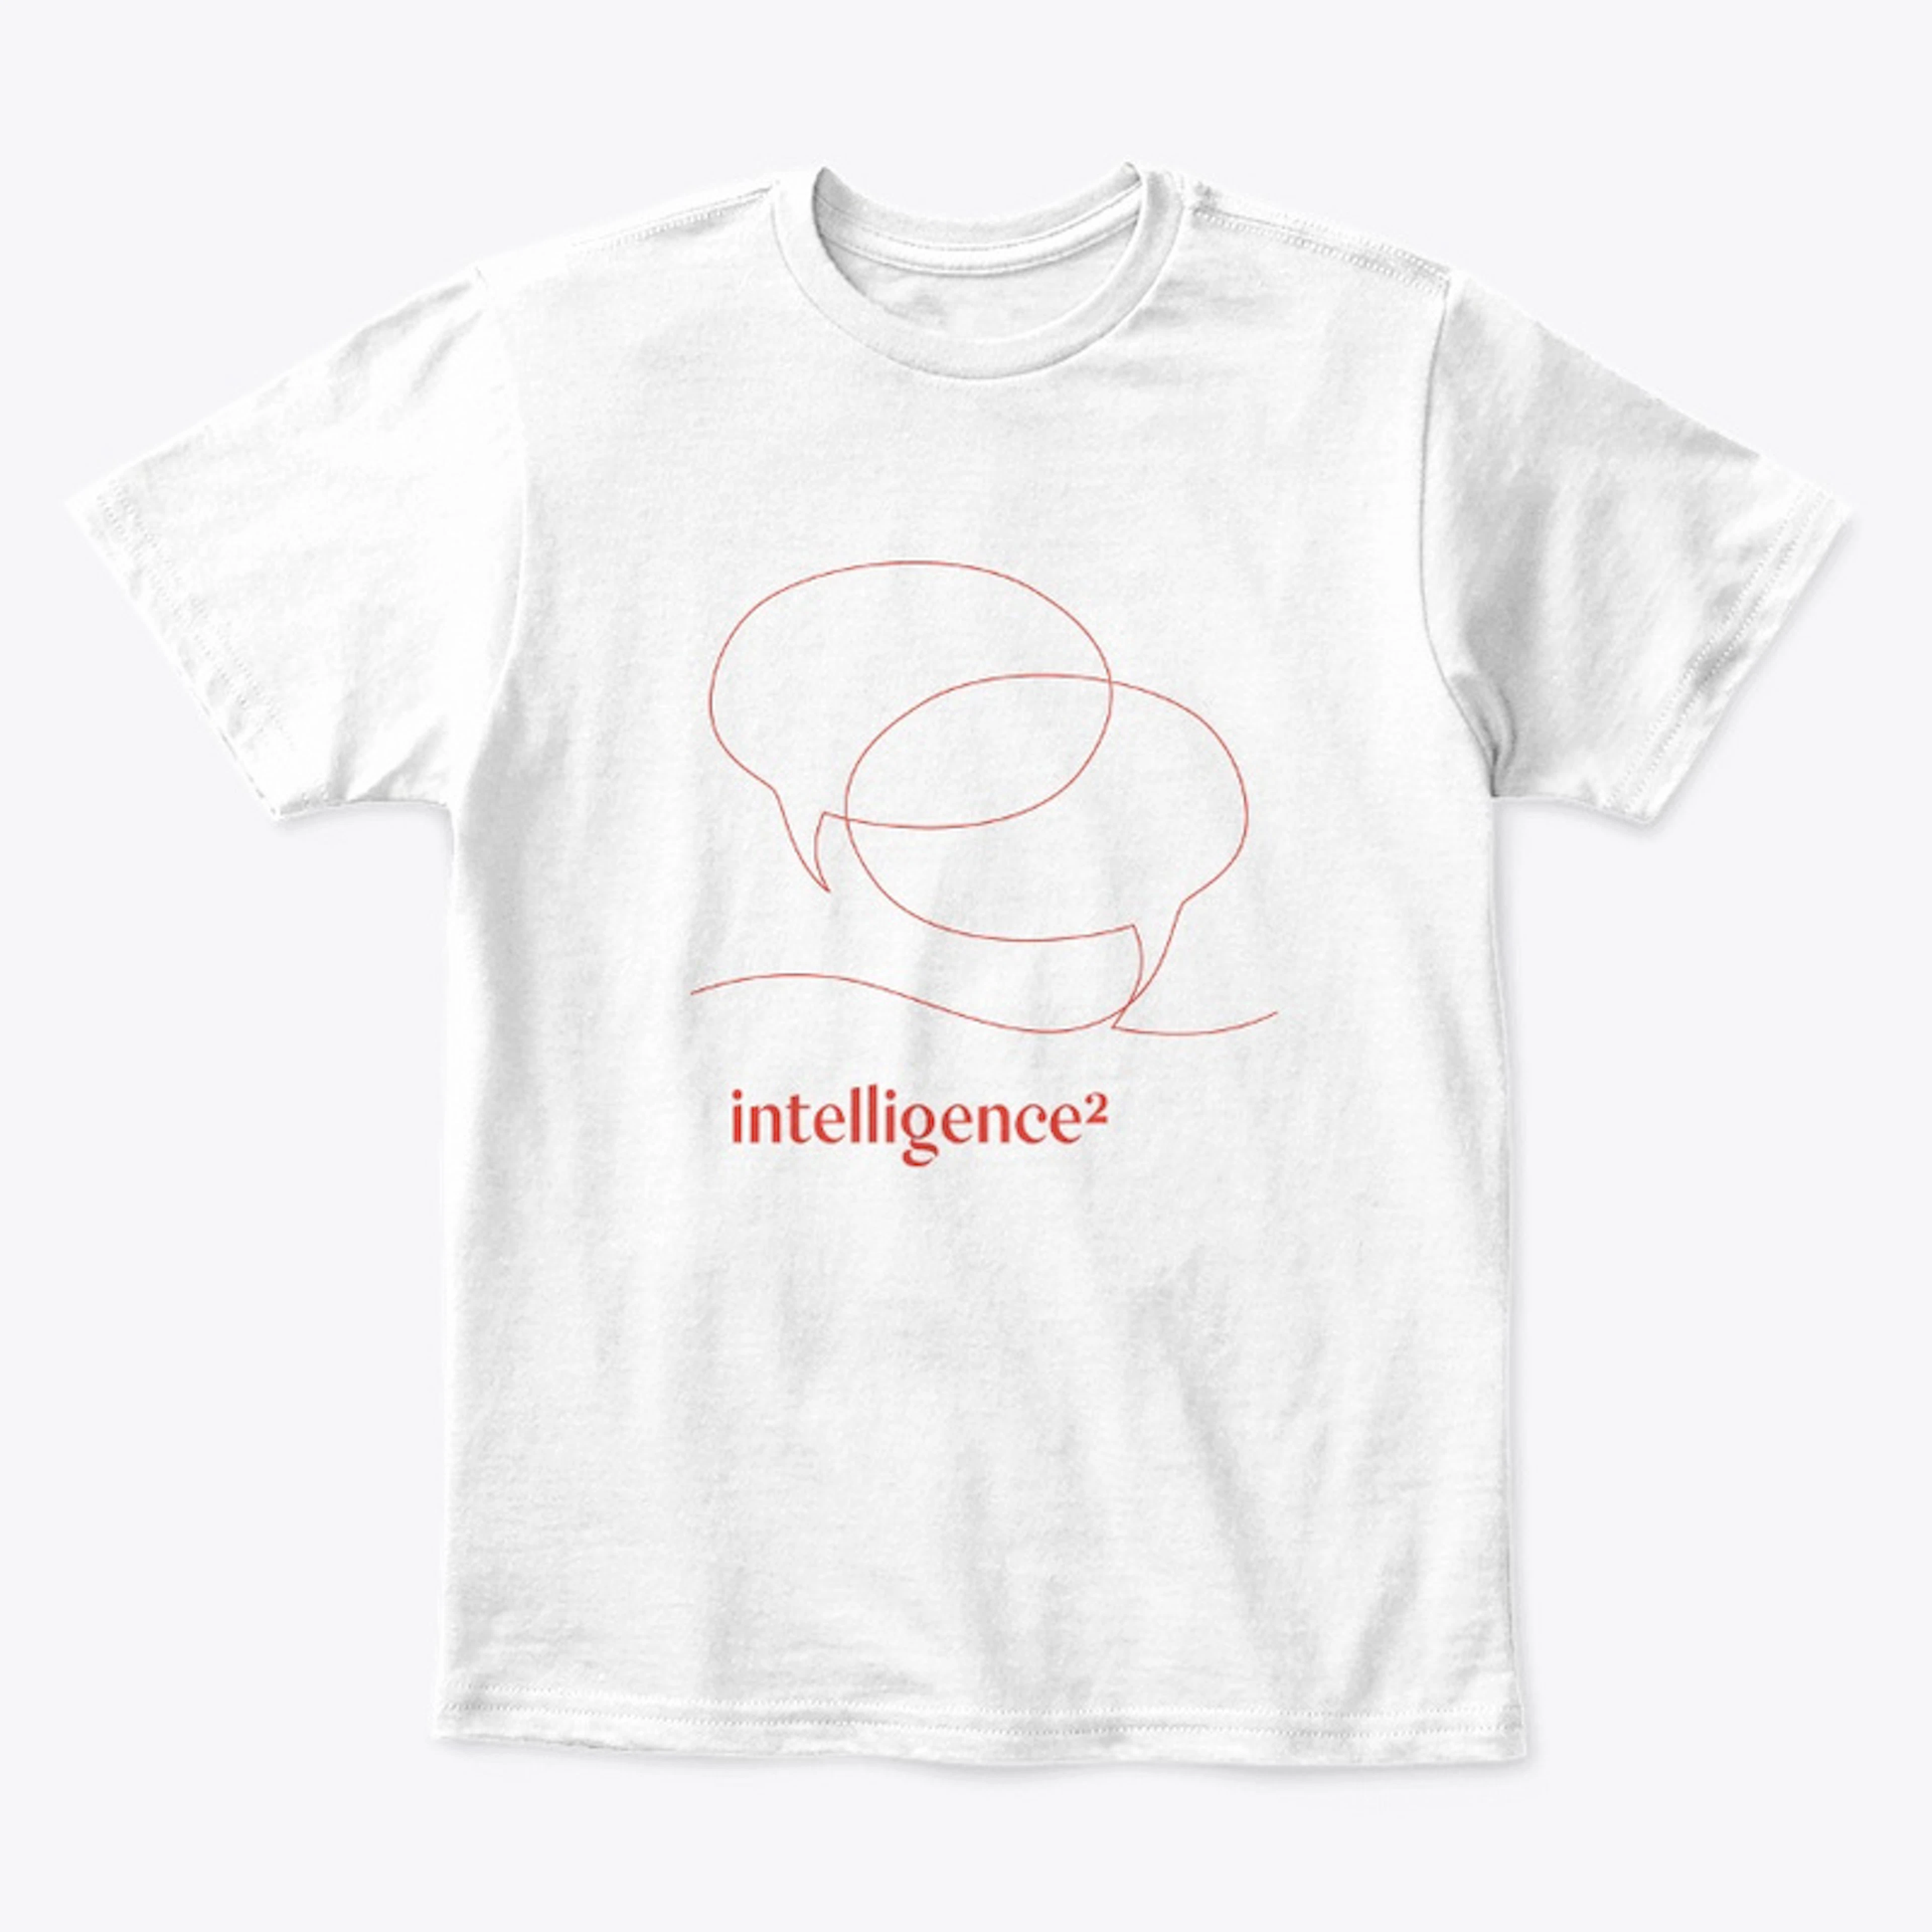 Intelligence Squared T-shirt - Red print